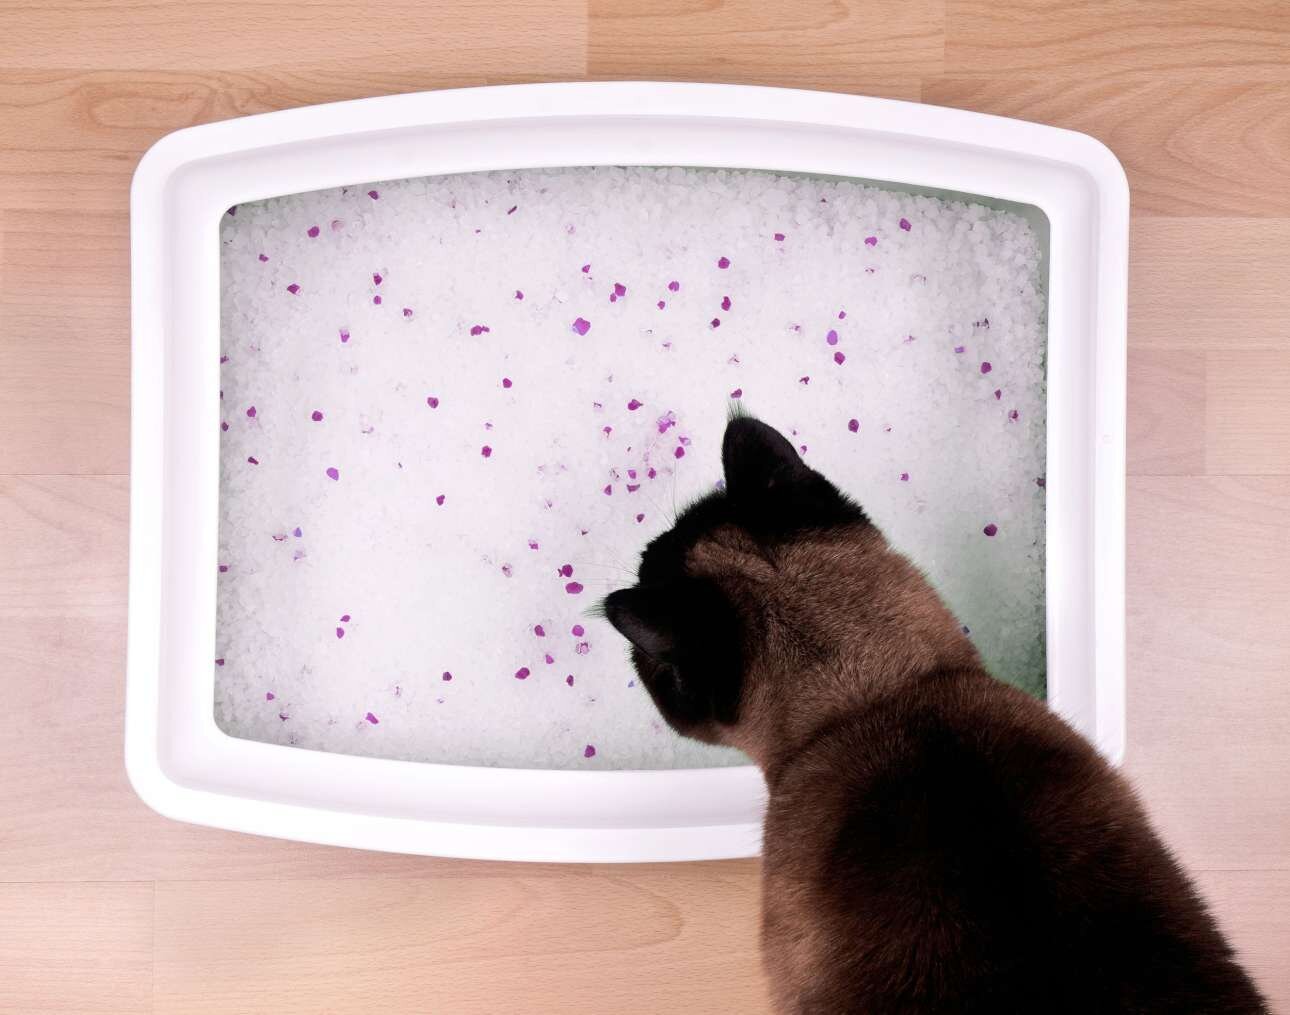 Silikoninis kraikas katėms Zwierzopasja Animal Litter, 5x3,8 L kaina ir informacija | Kraikas katėms | pigu.lt